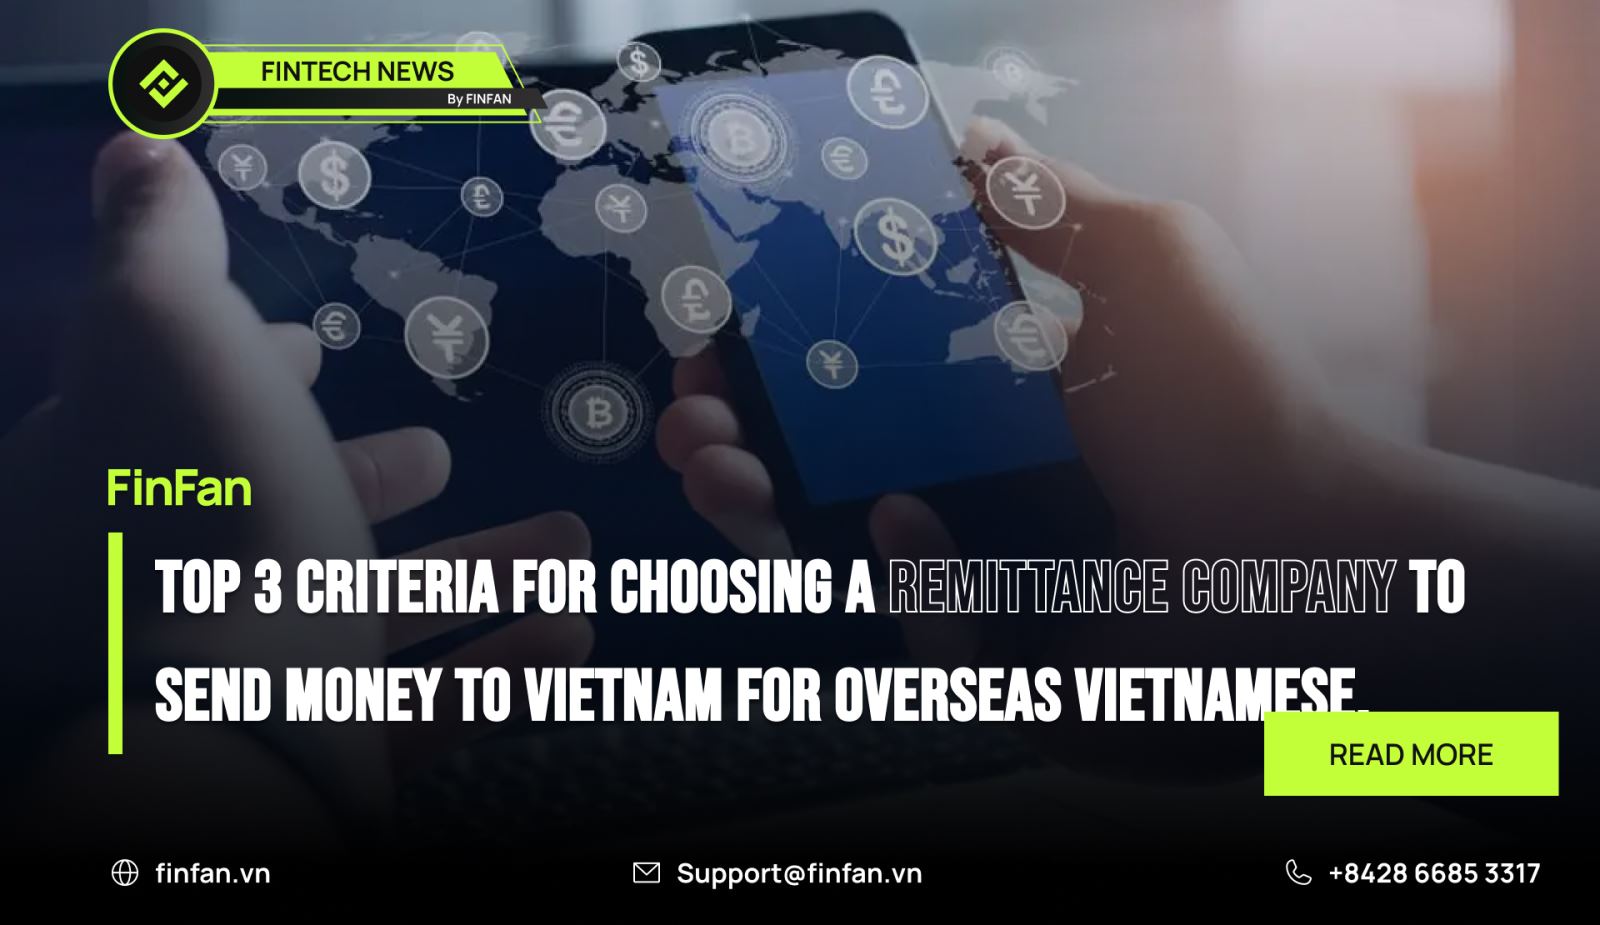 Top 3 criteria for choosing a company to send money to Vietnam for overseas Vietnamese.